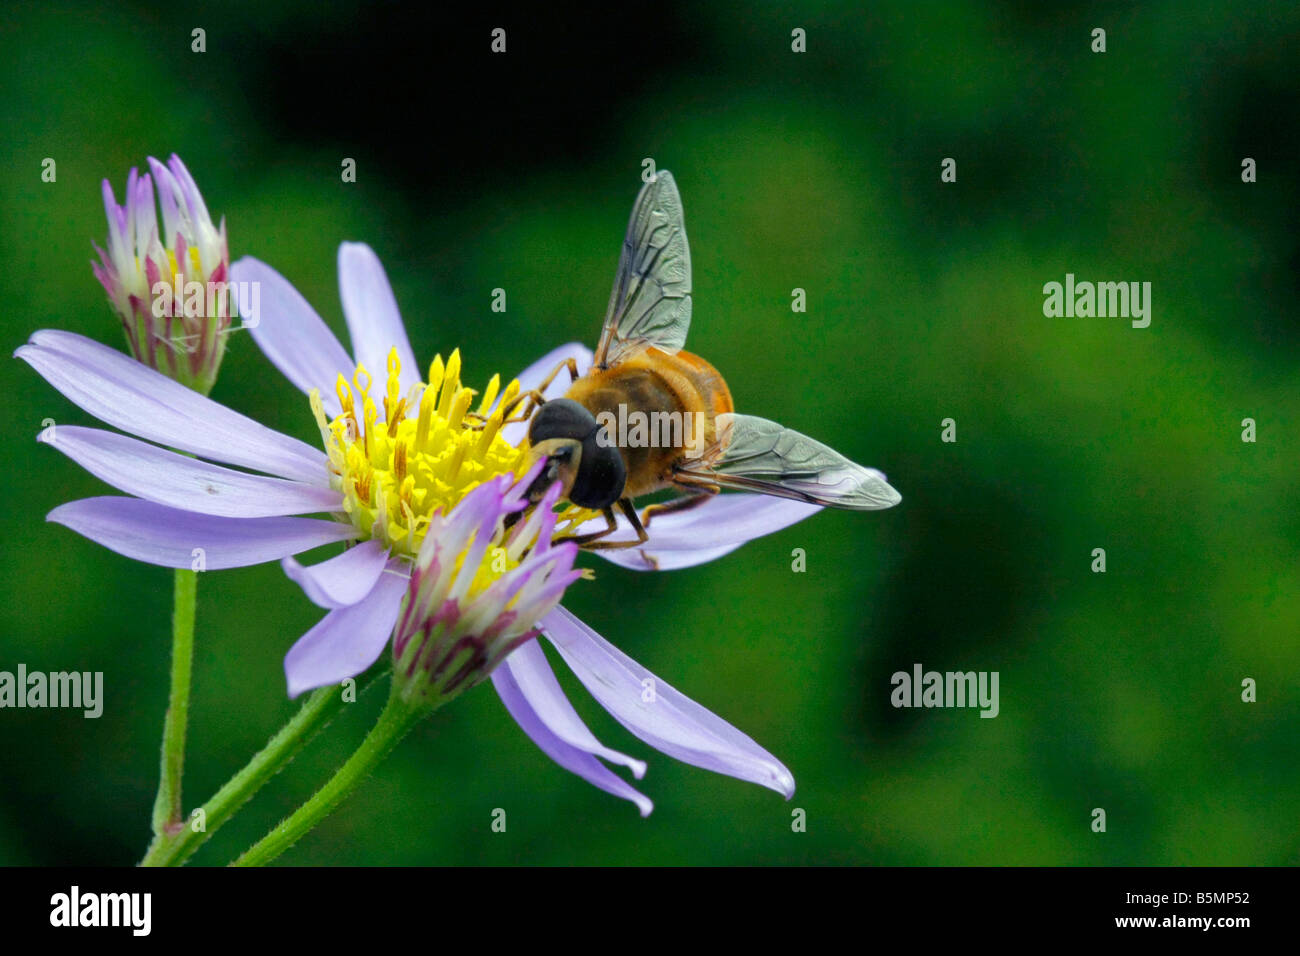 A bee on flowers Kanagawa Japan Stock Photo